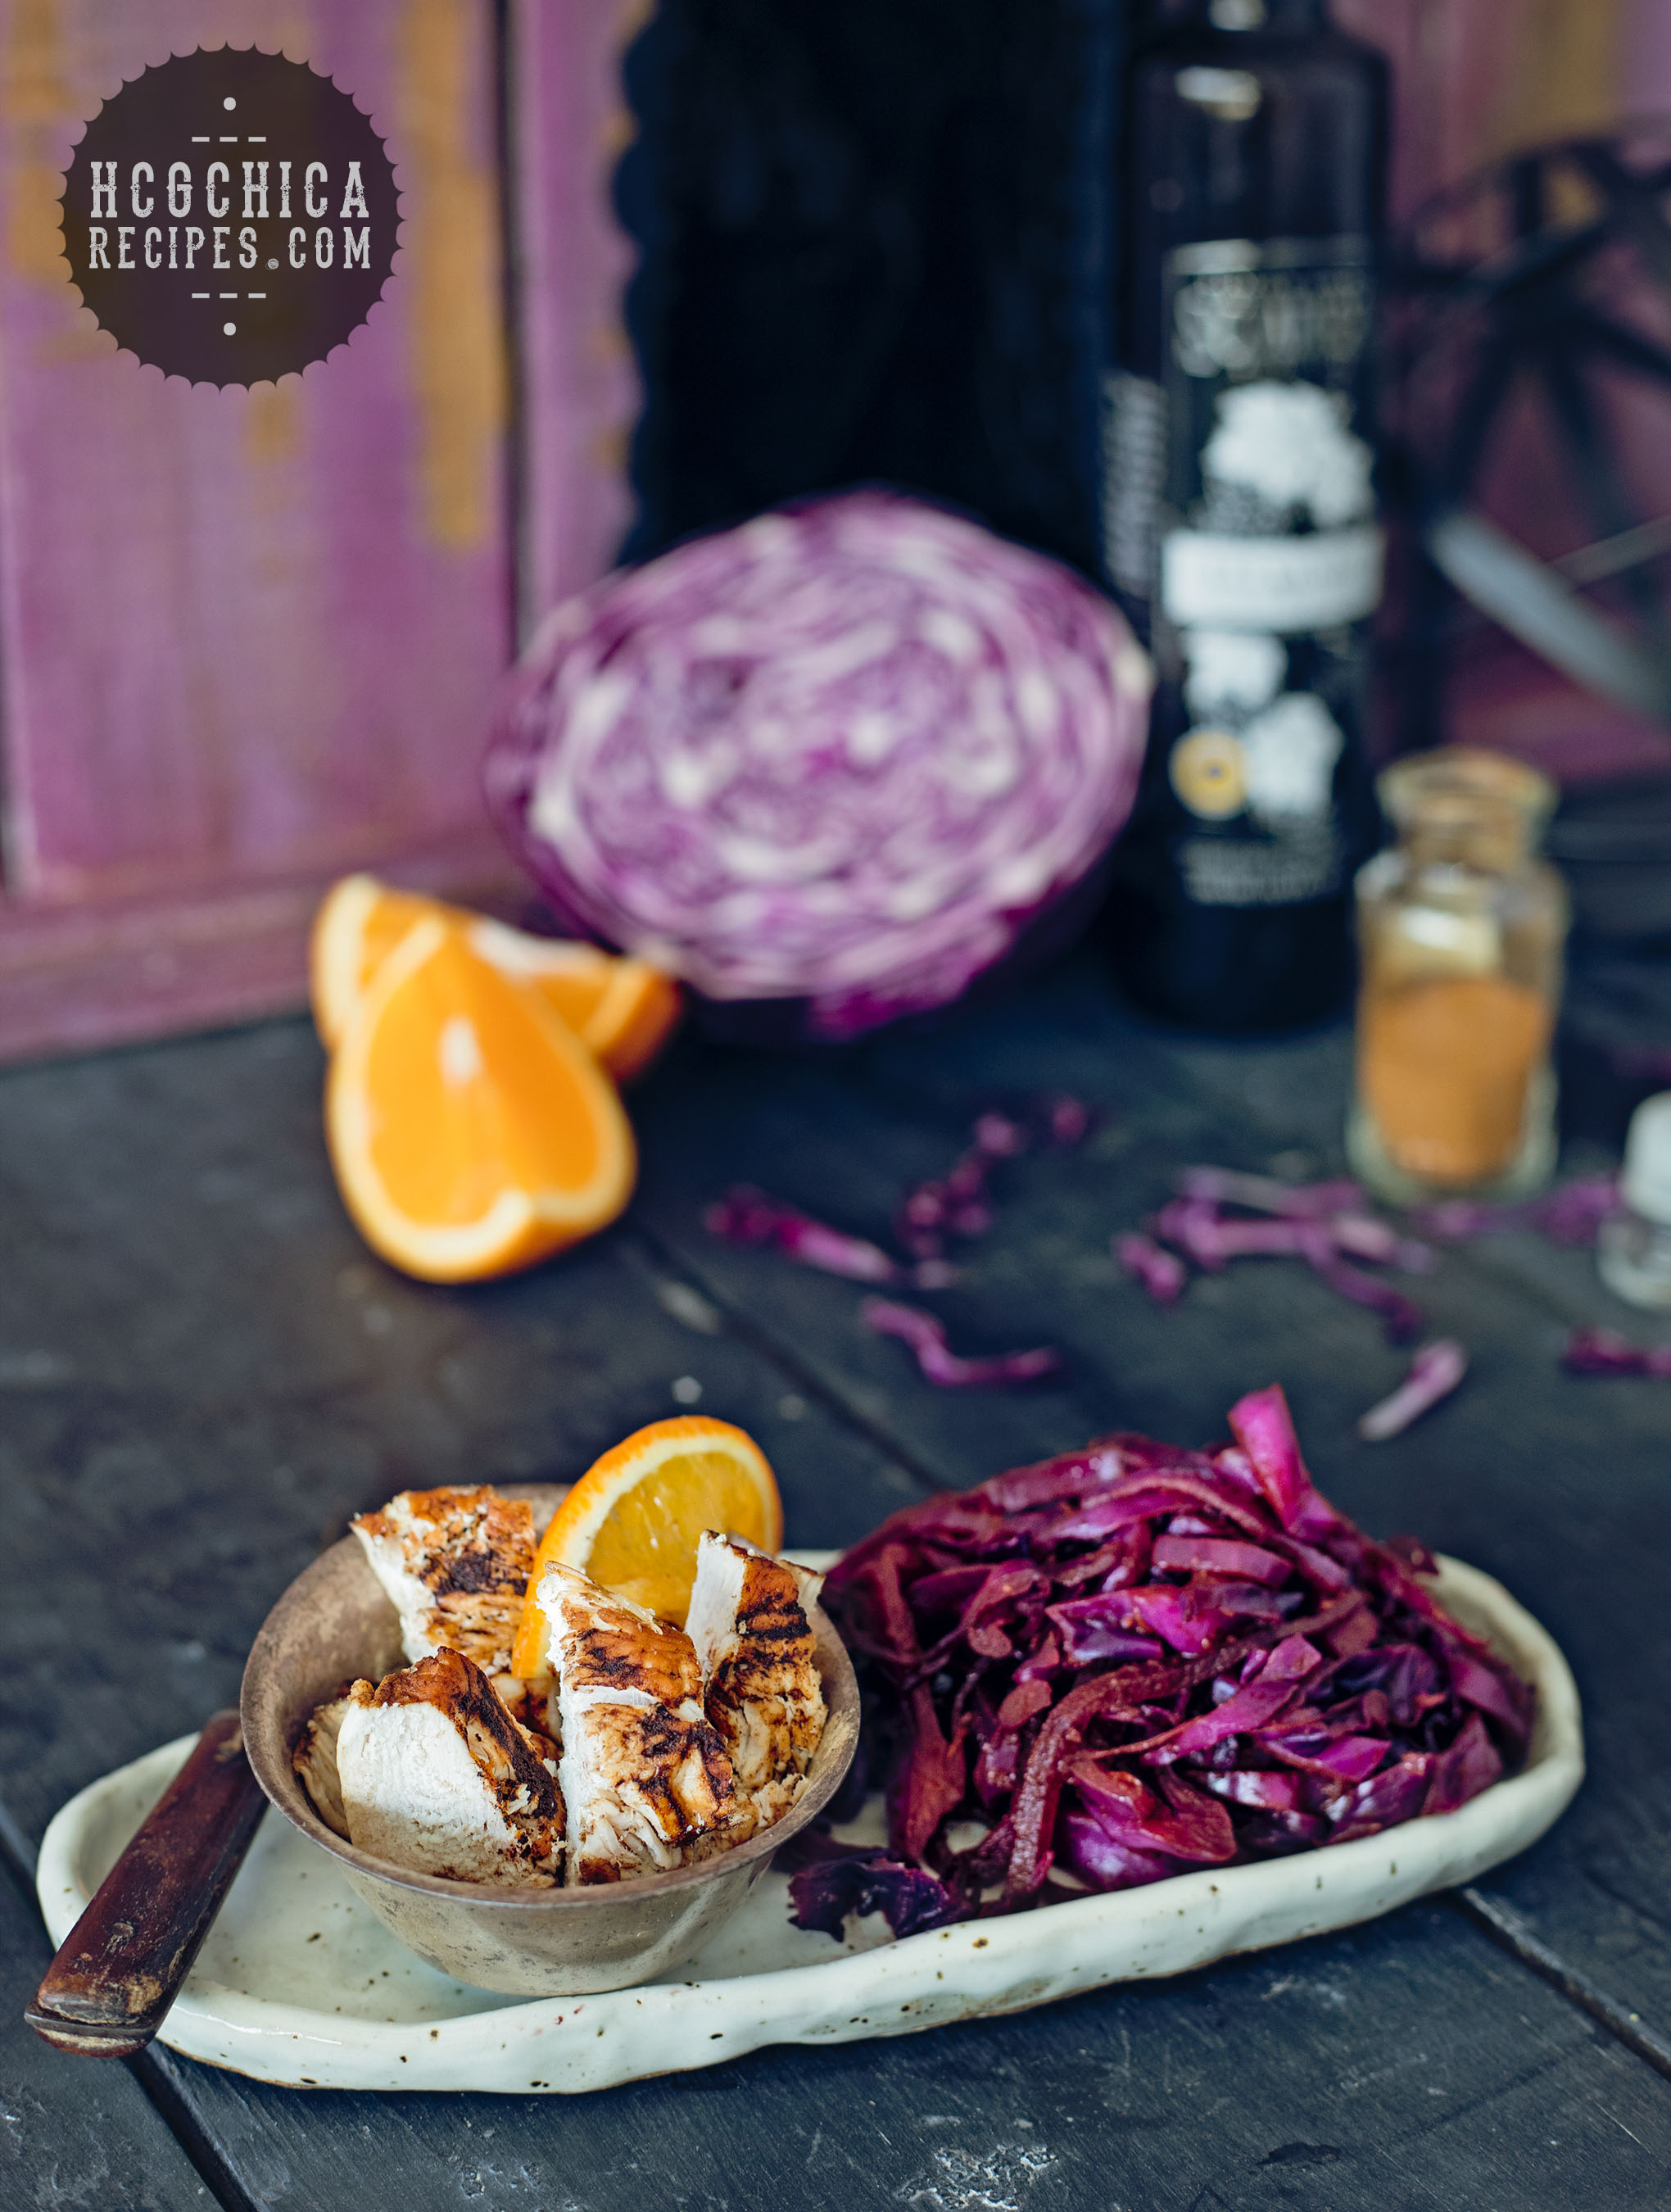 P2 hCG Diet Lunch Recipe: Orange Cabbage Relish & Chicken - hcgchicarecipes.com - Protein + Veggie + Fruit Meal